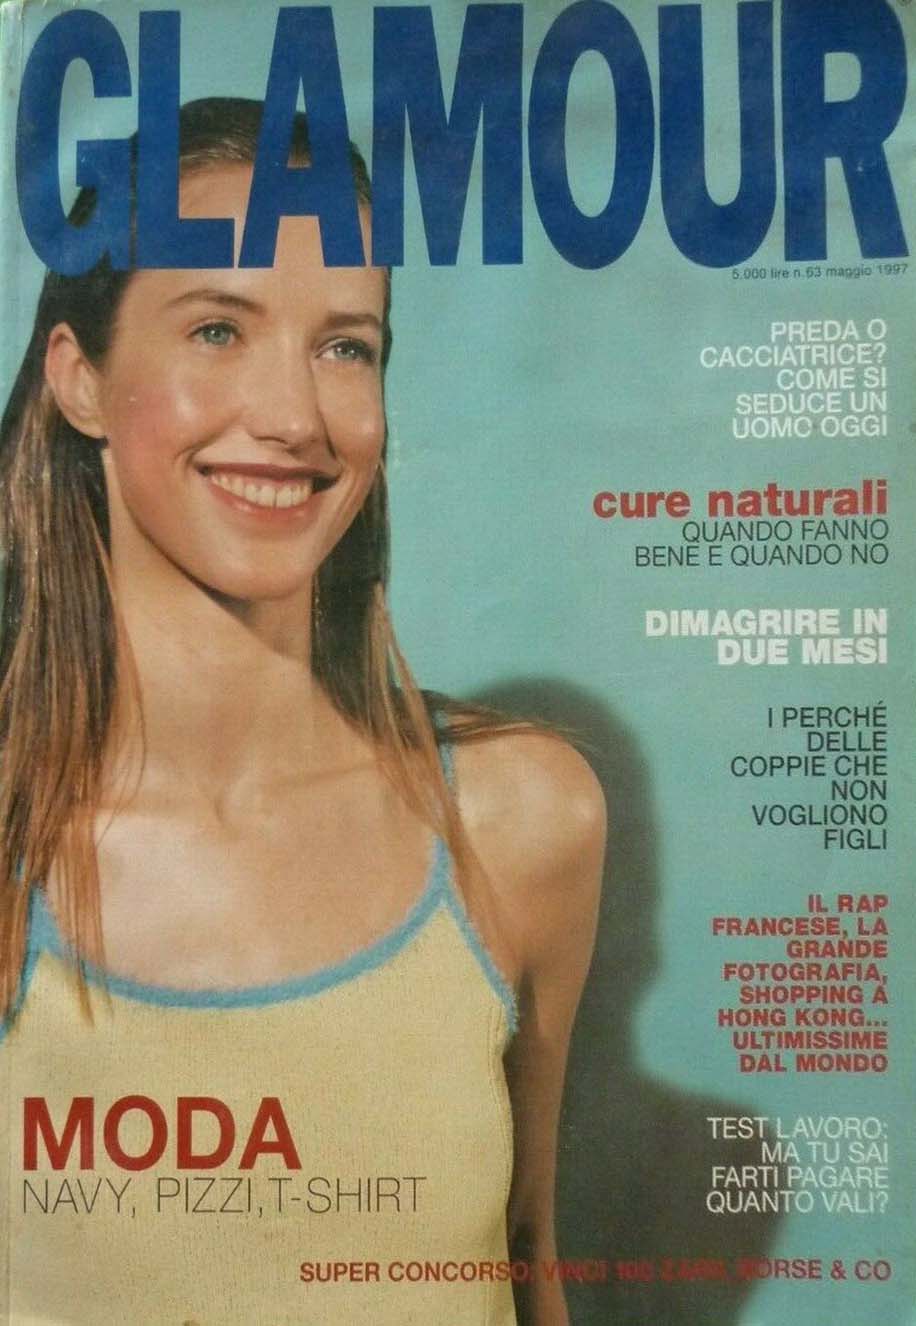 Glamour May 1997 magazine back issue Glamour magizine back copy Glamour May 1997 Womens Magazine Back Issue Published by Conde Nast Publications. Preda O Cacciatrice? Come Si Seduce Un Uomo Oggi.